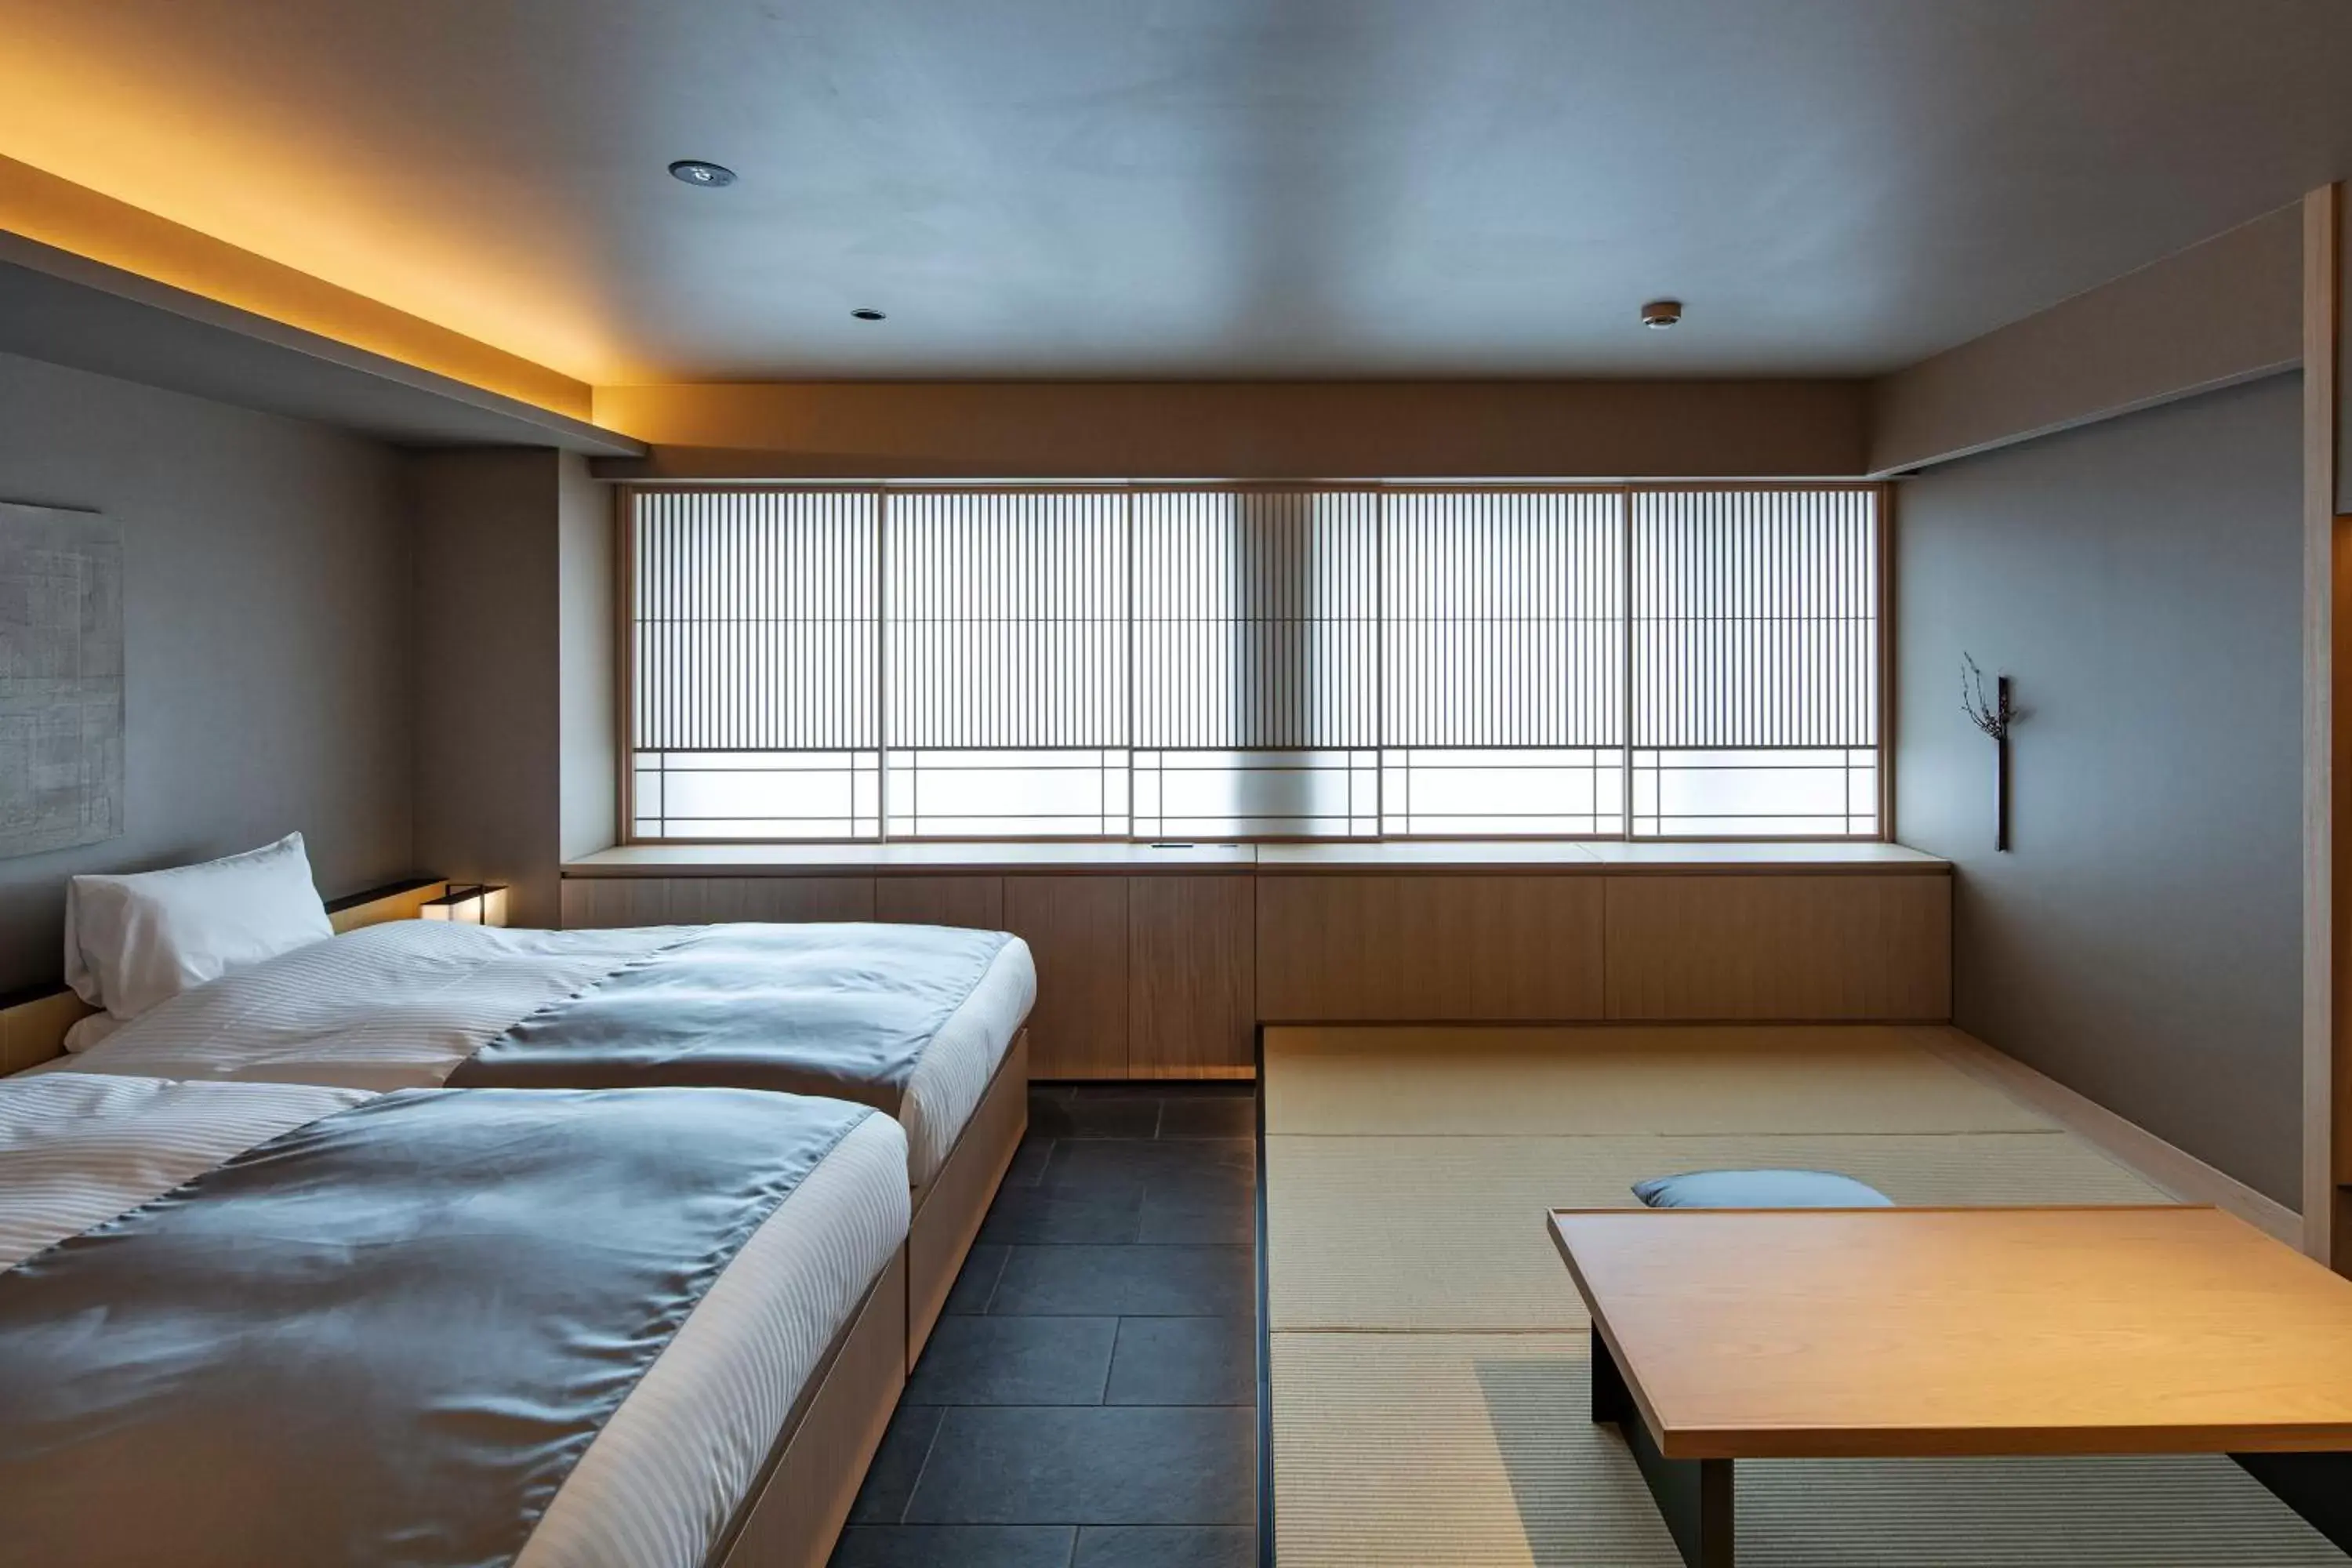 Bedroom in hotel tou nishinotoin kyoto